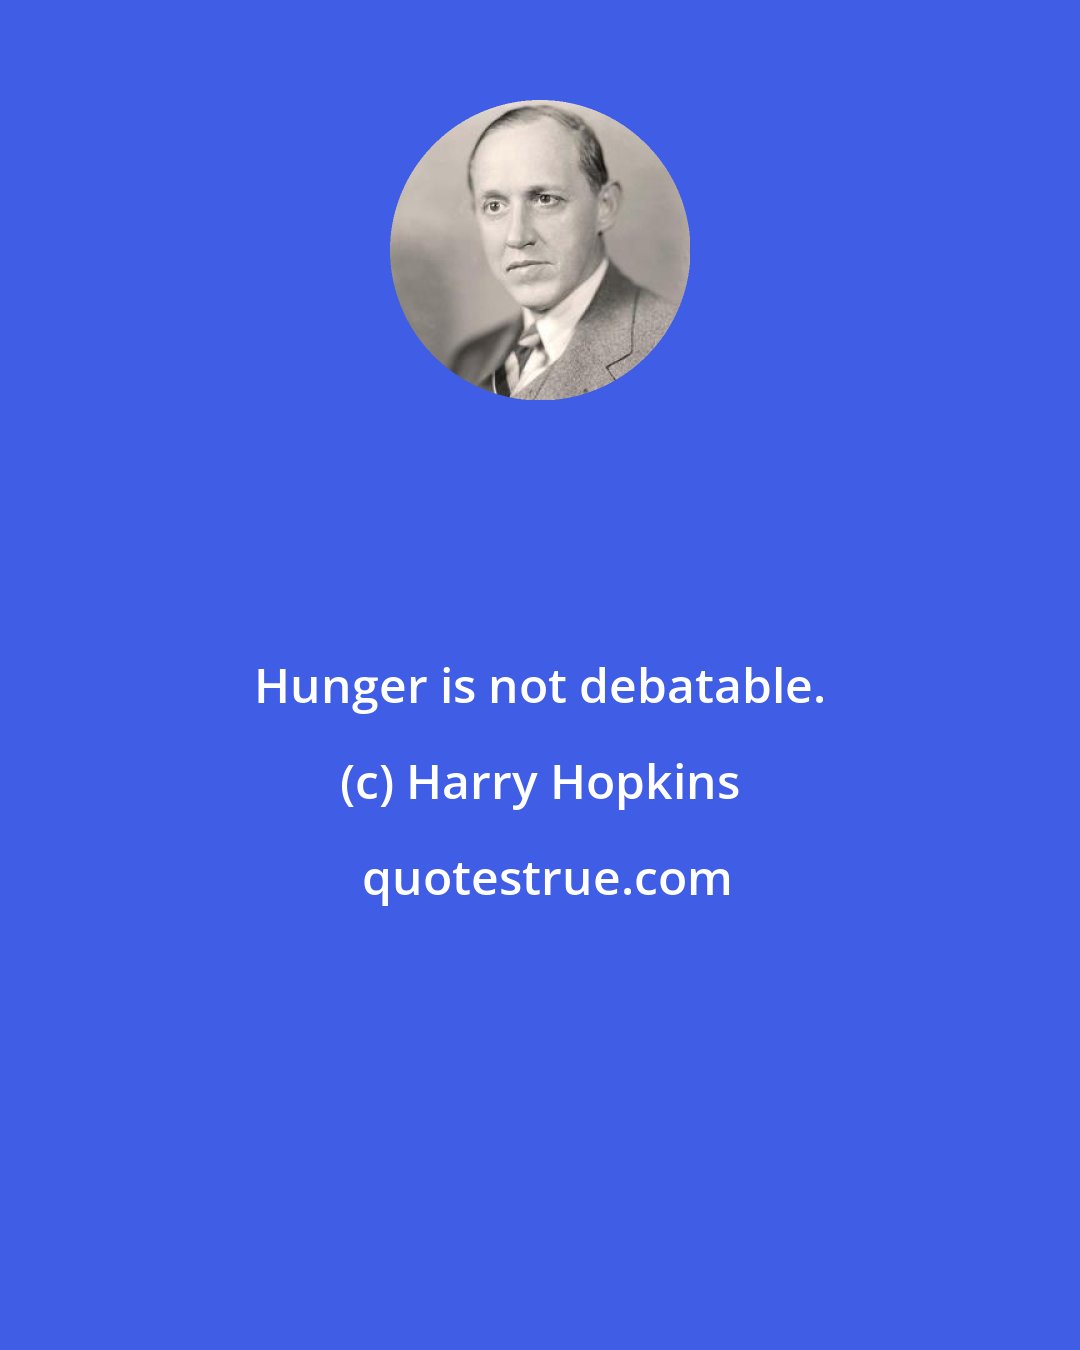 Harry Hopkins: Hunger is not debatable.